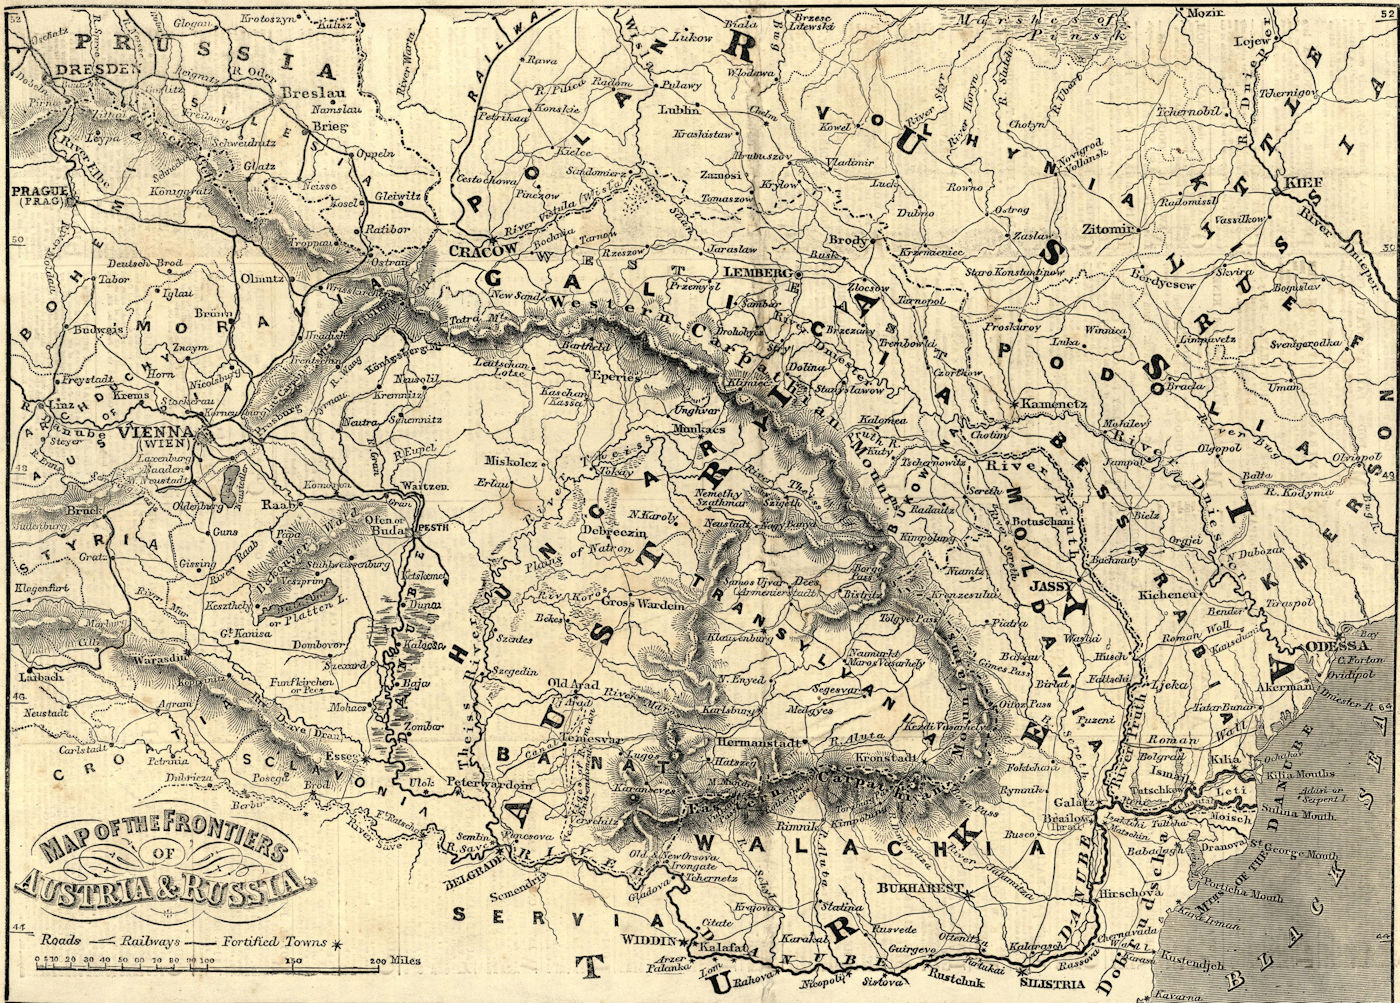 The frontiers of Austria & Russia. Romania Hungary Moldova Poland 1856 map